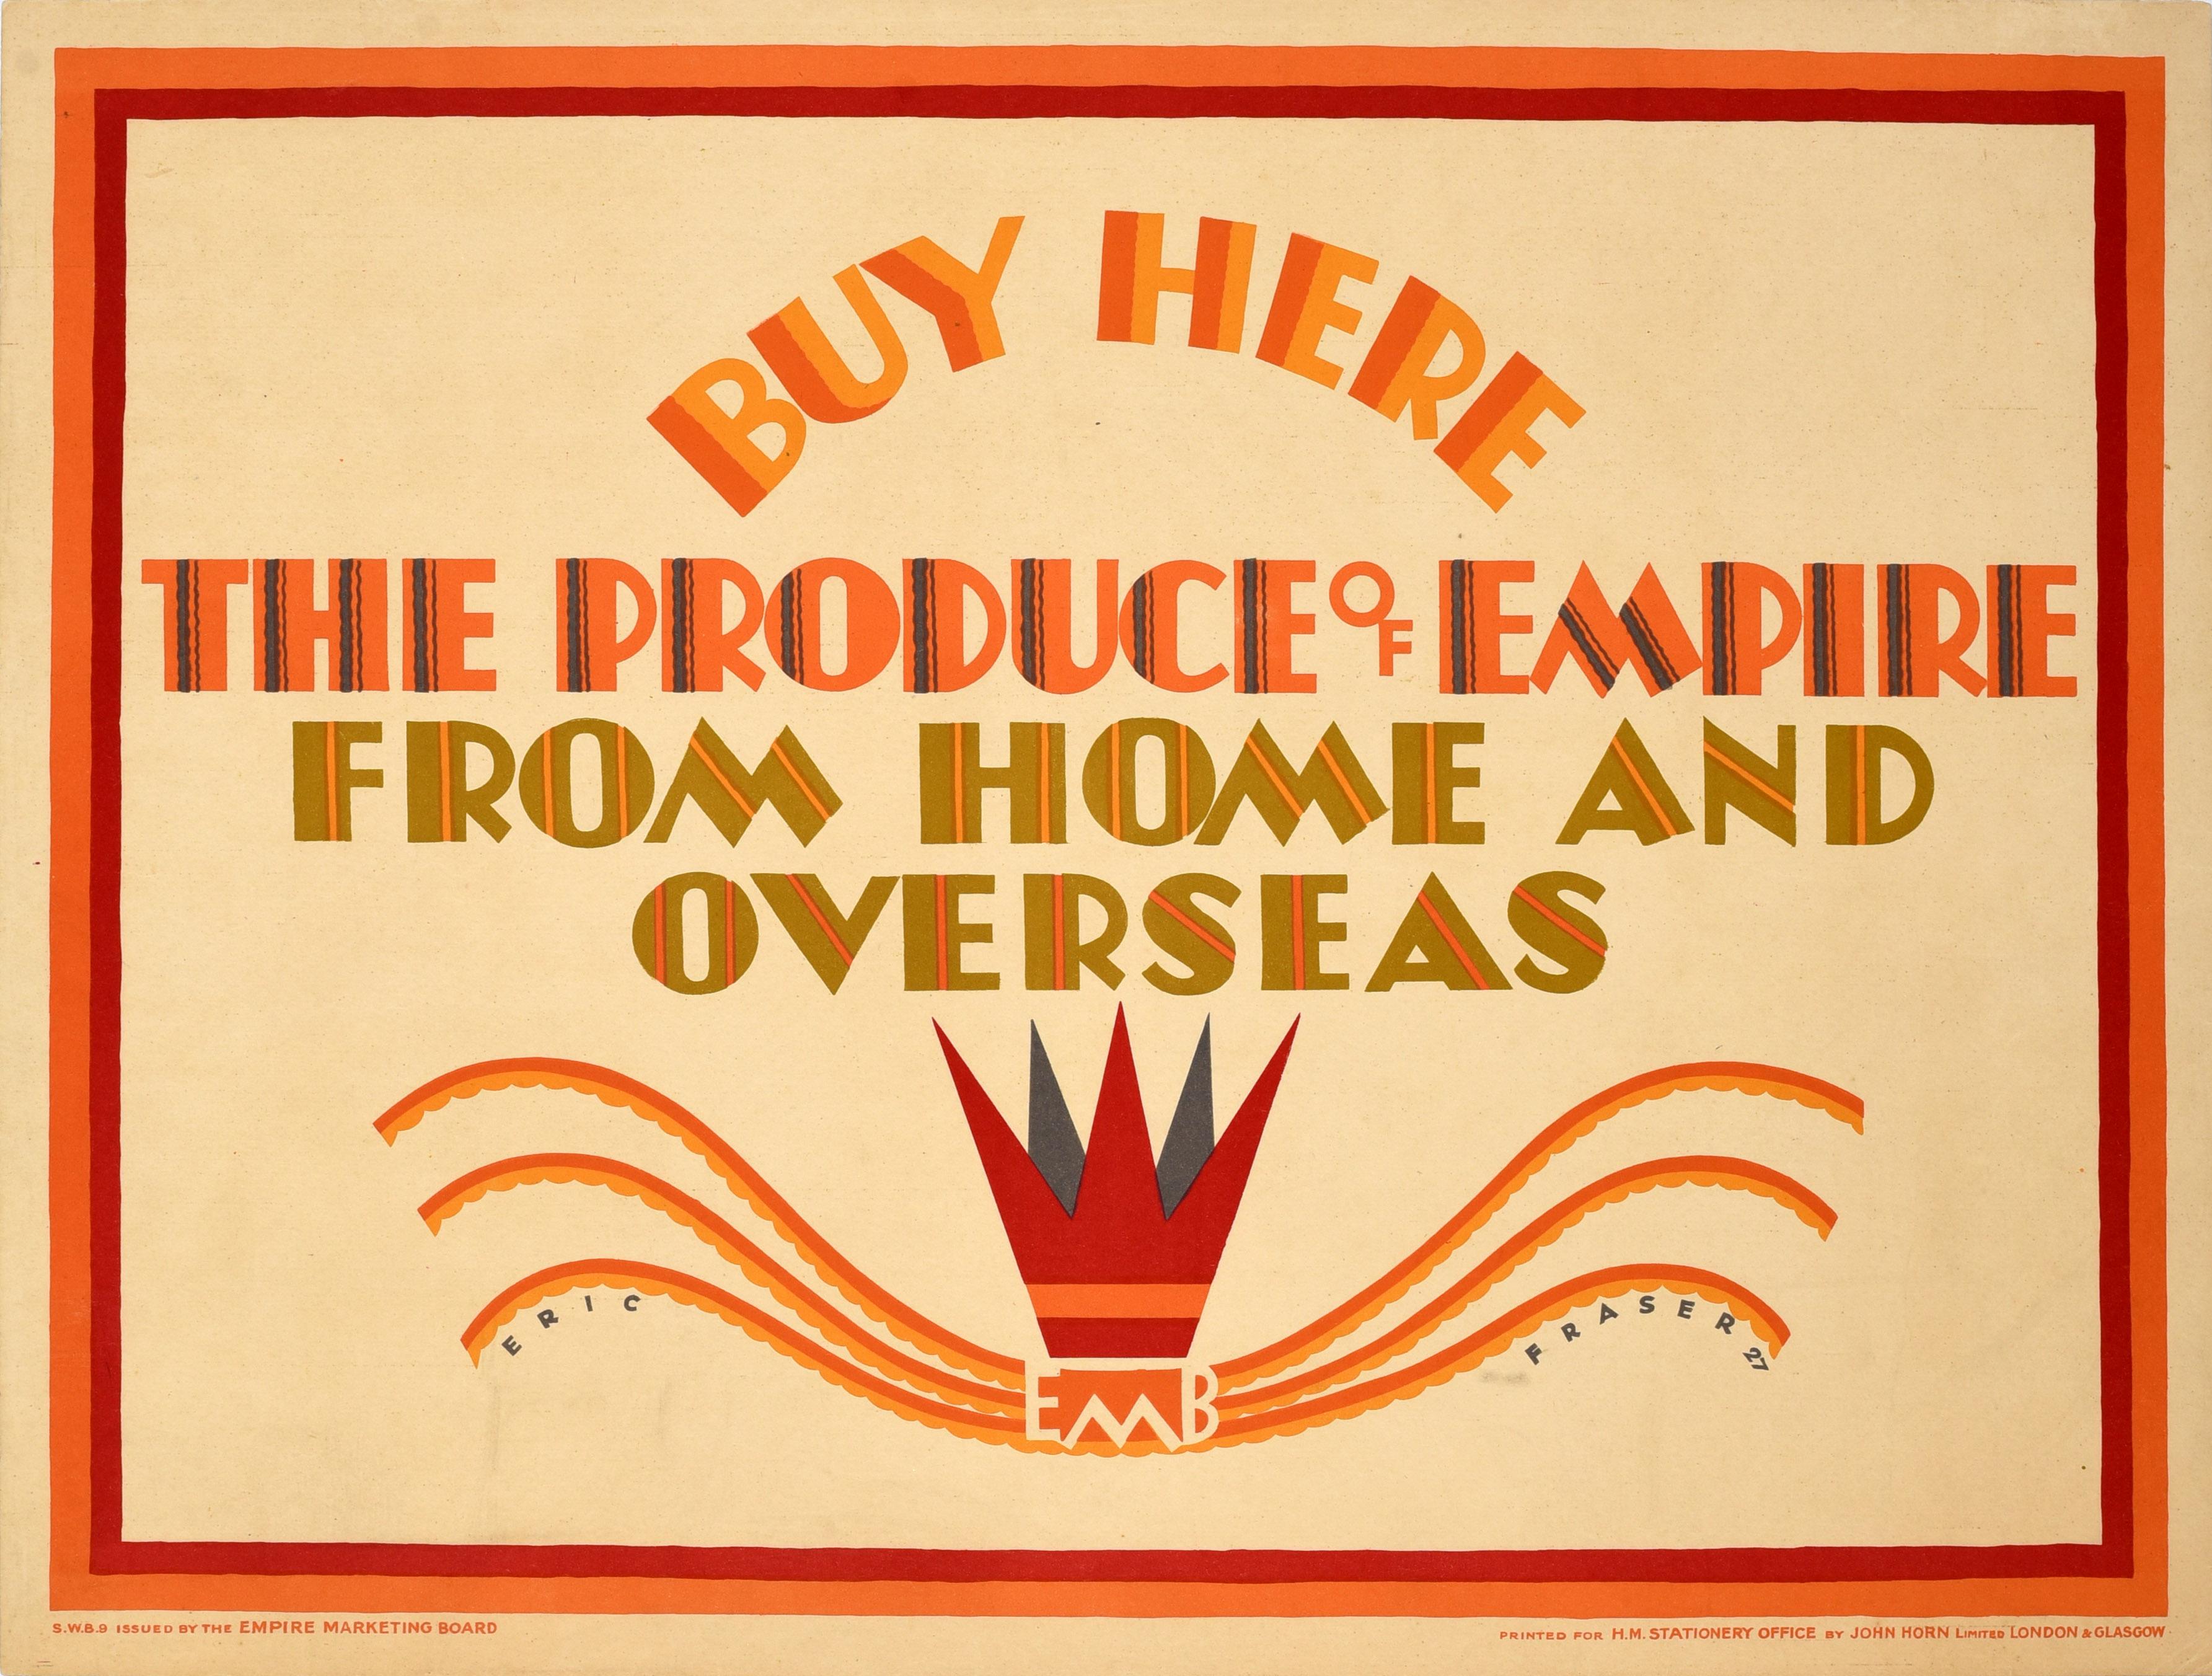 Eric Fraser Print – Original-Vintage-Werbeplakat „ Buy Here Produce Of Empire“, Marketingboard